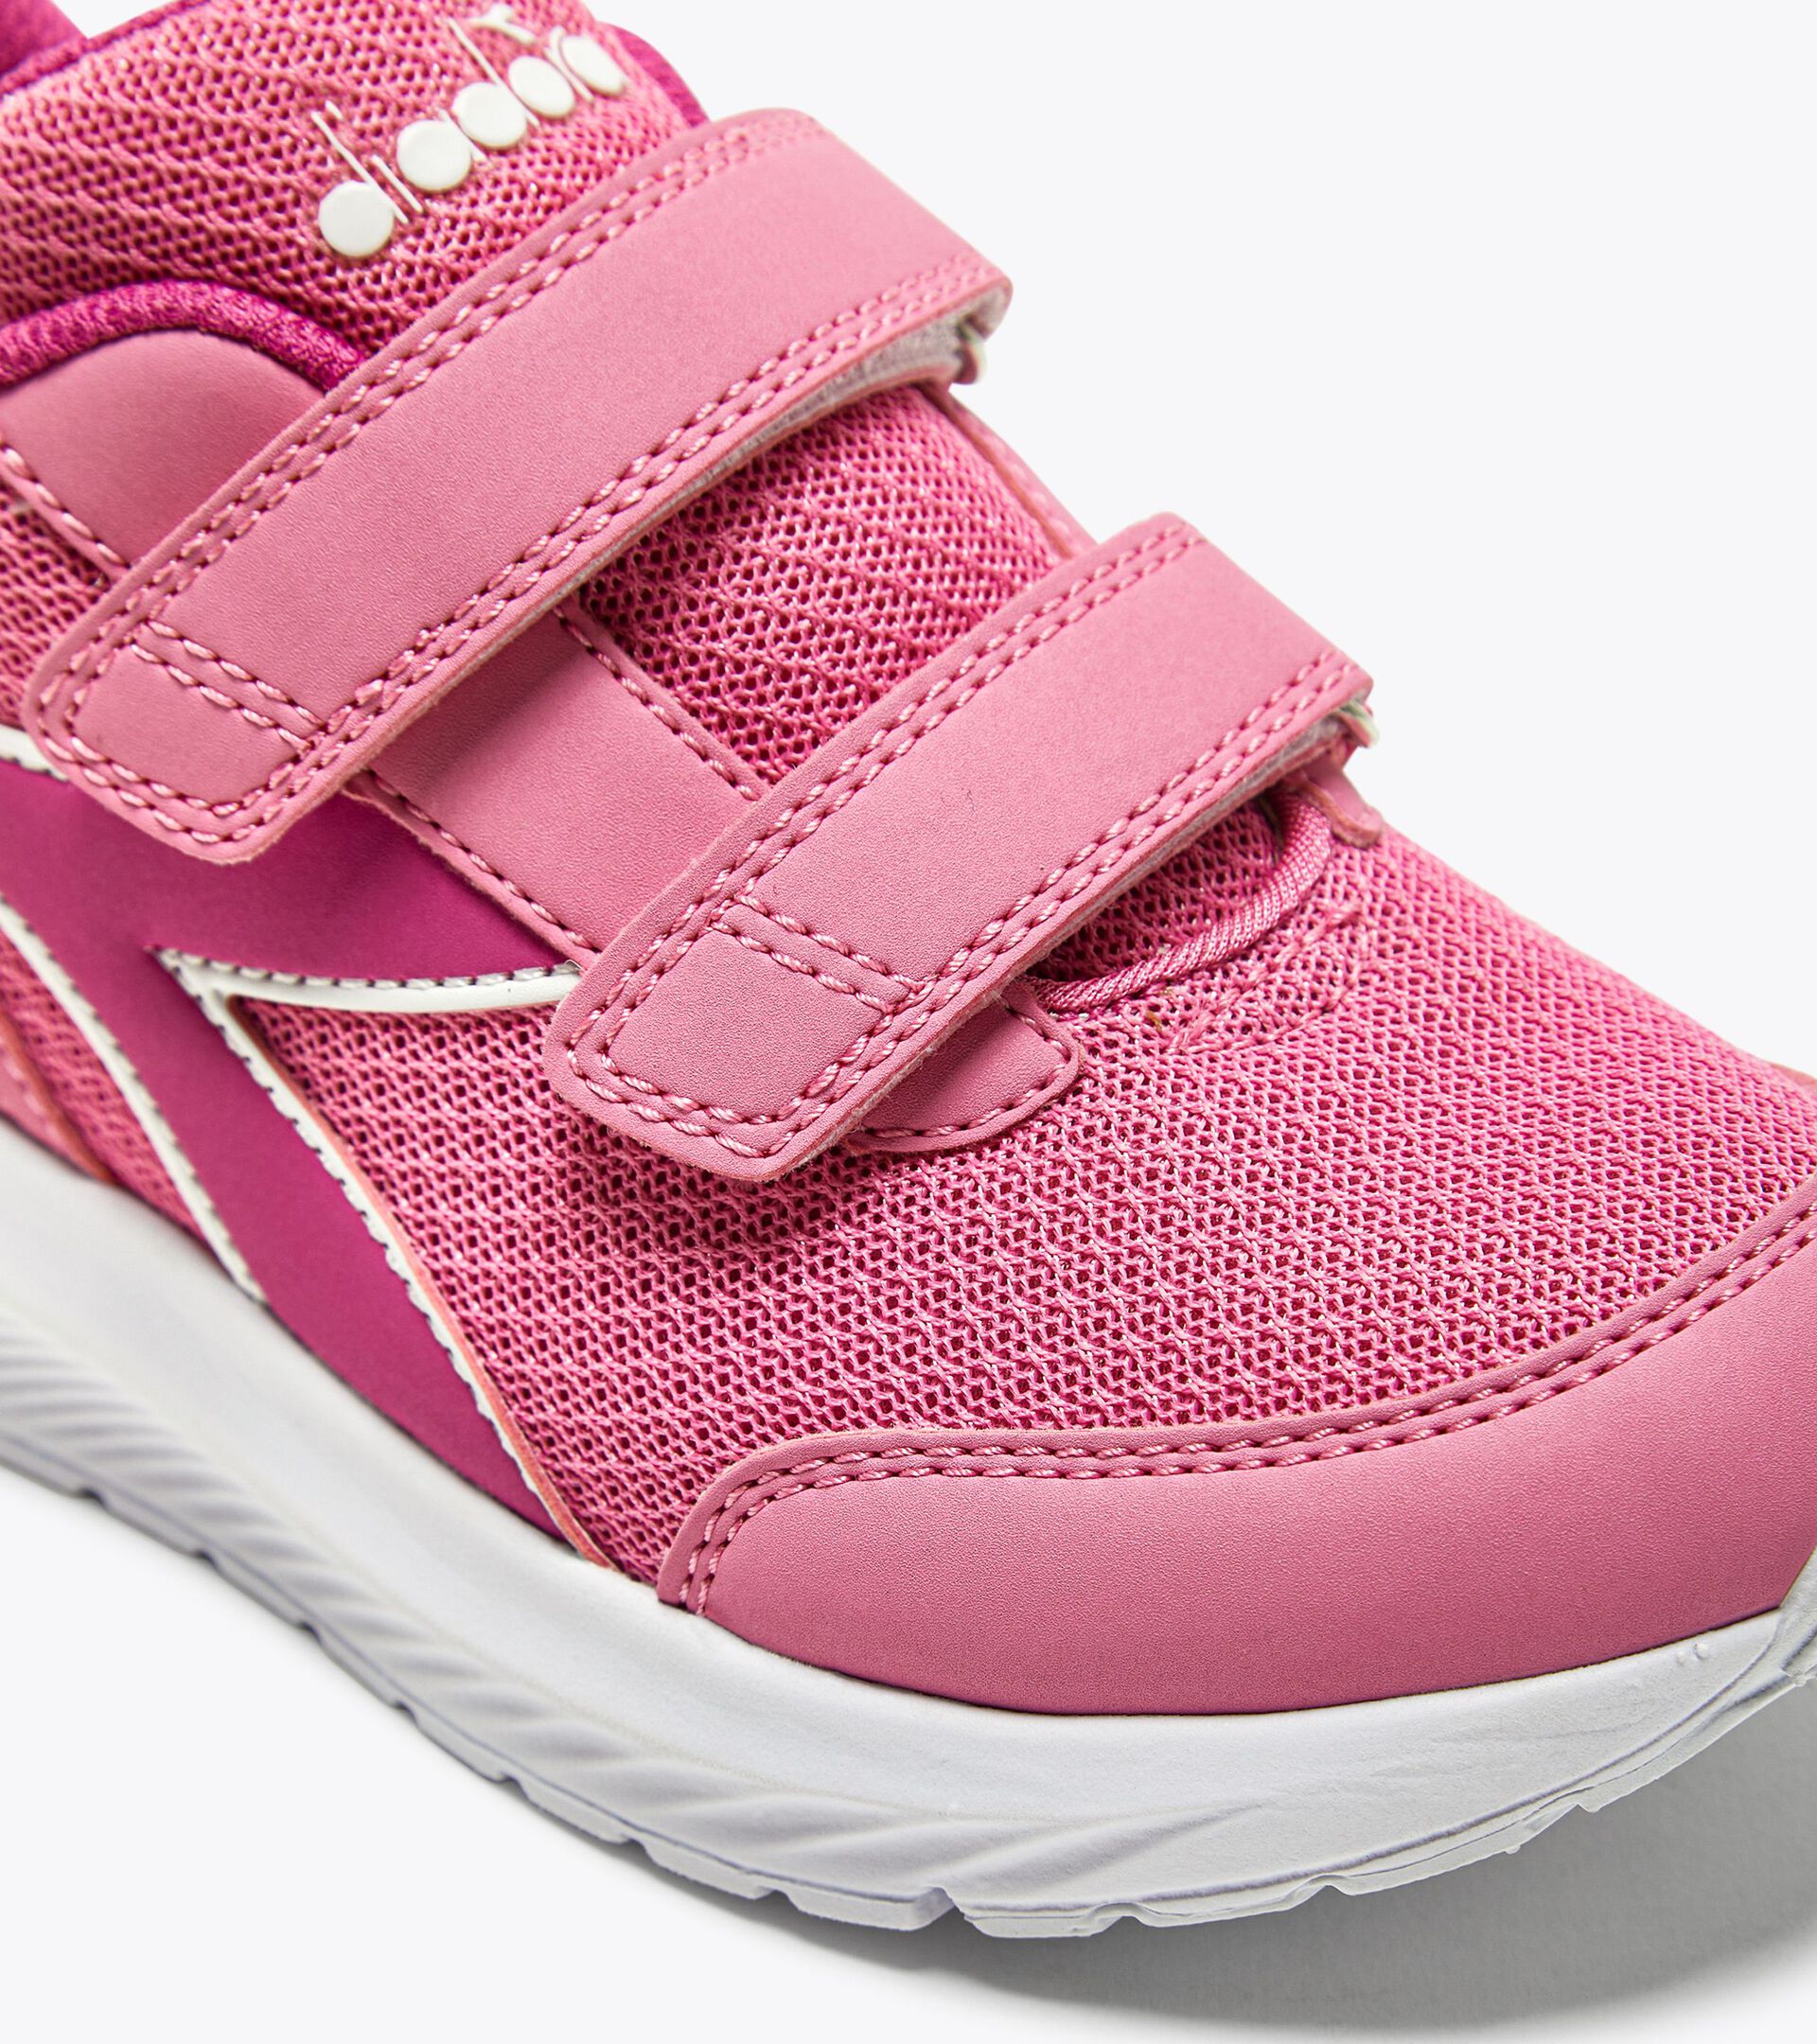 Junior running shoes - Gender Neutral FALCON 3 JR V AURORA PINK/ROSE VIOLET - Diadora